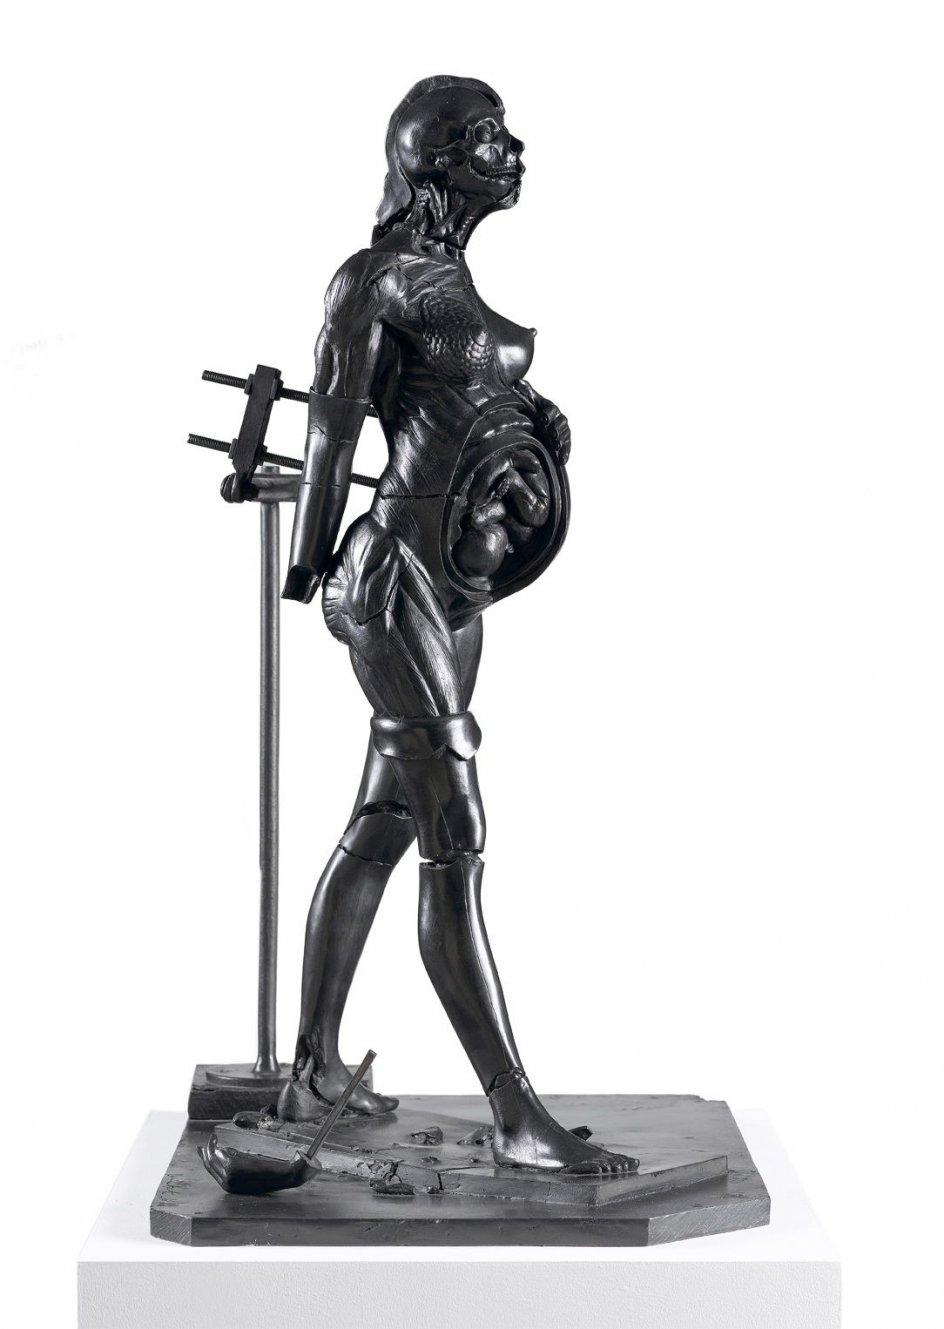 Damien Hirst Figurative Sculpture - "Corruption"